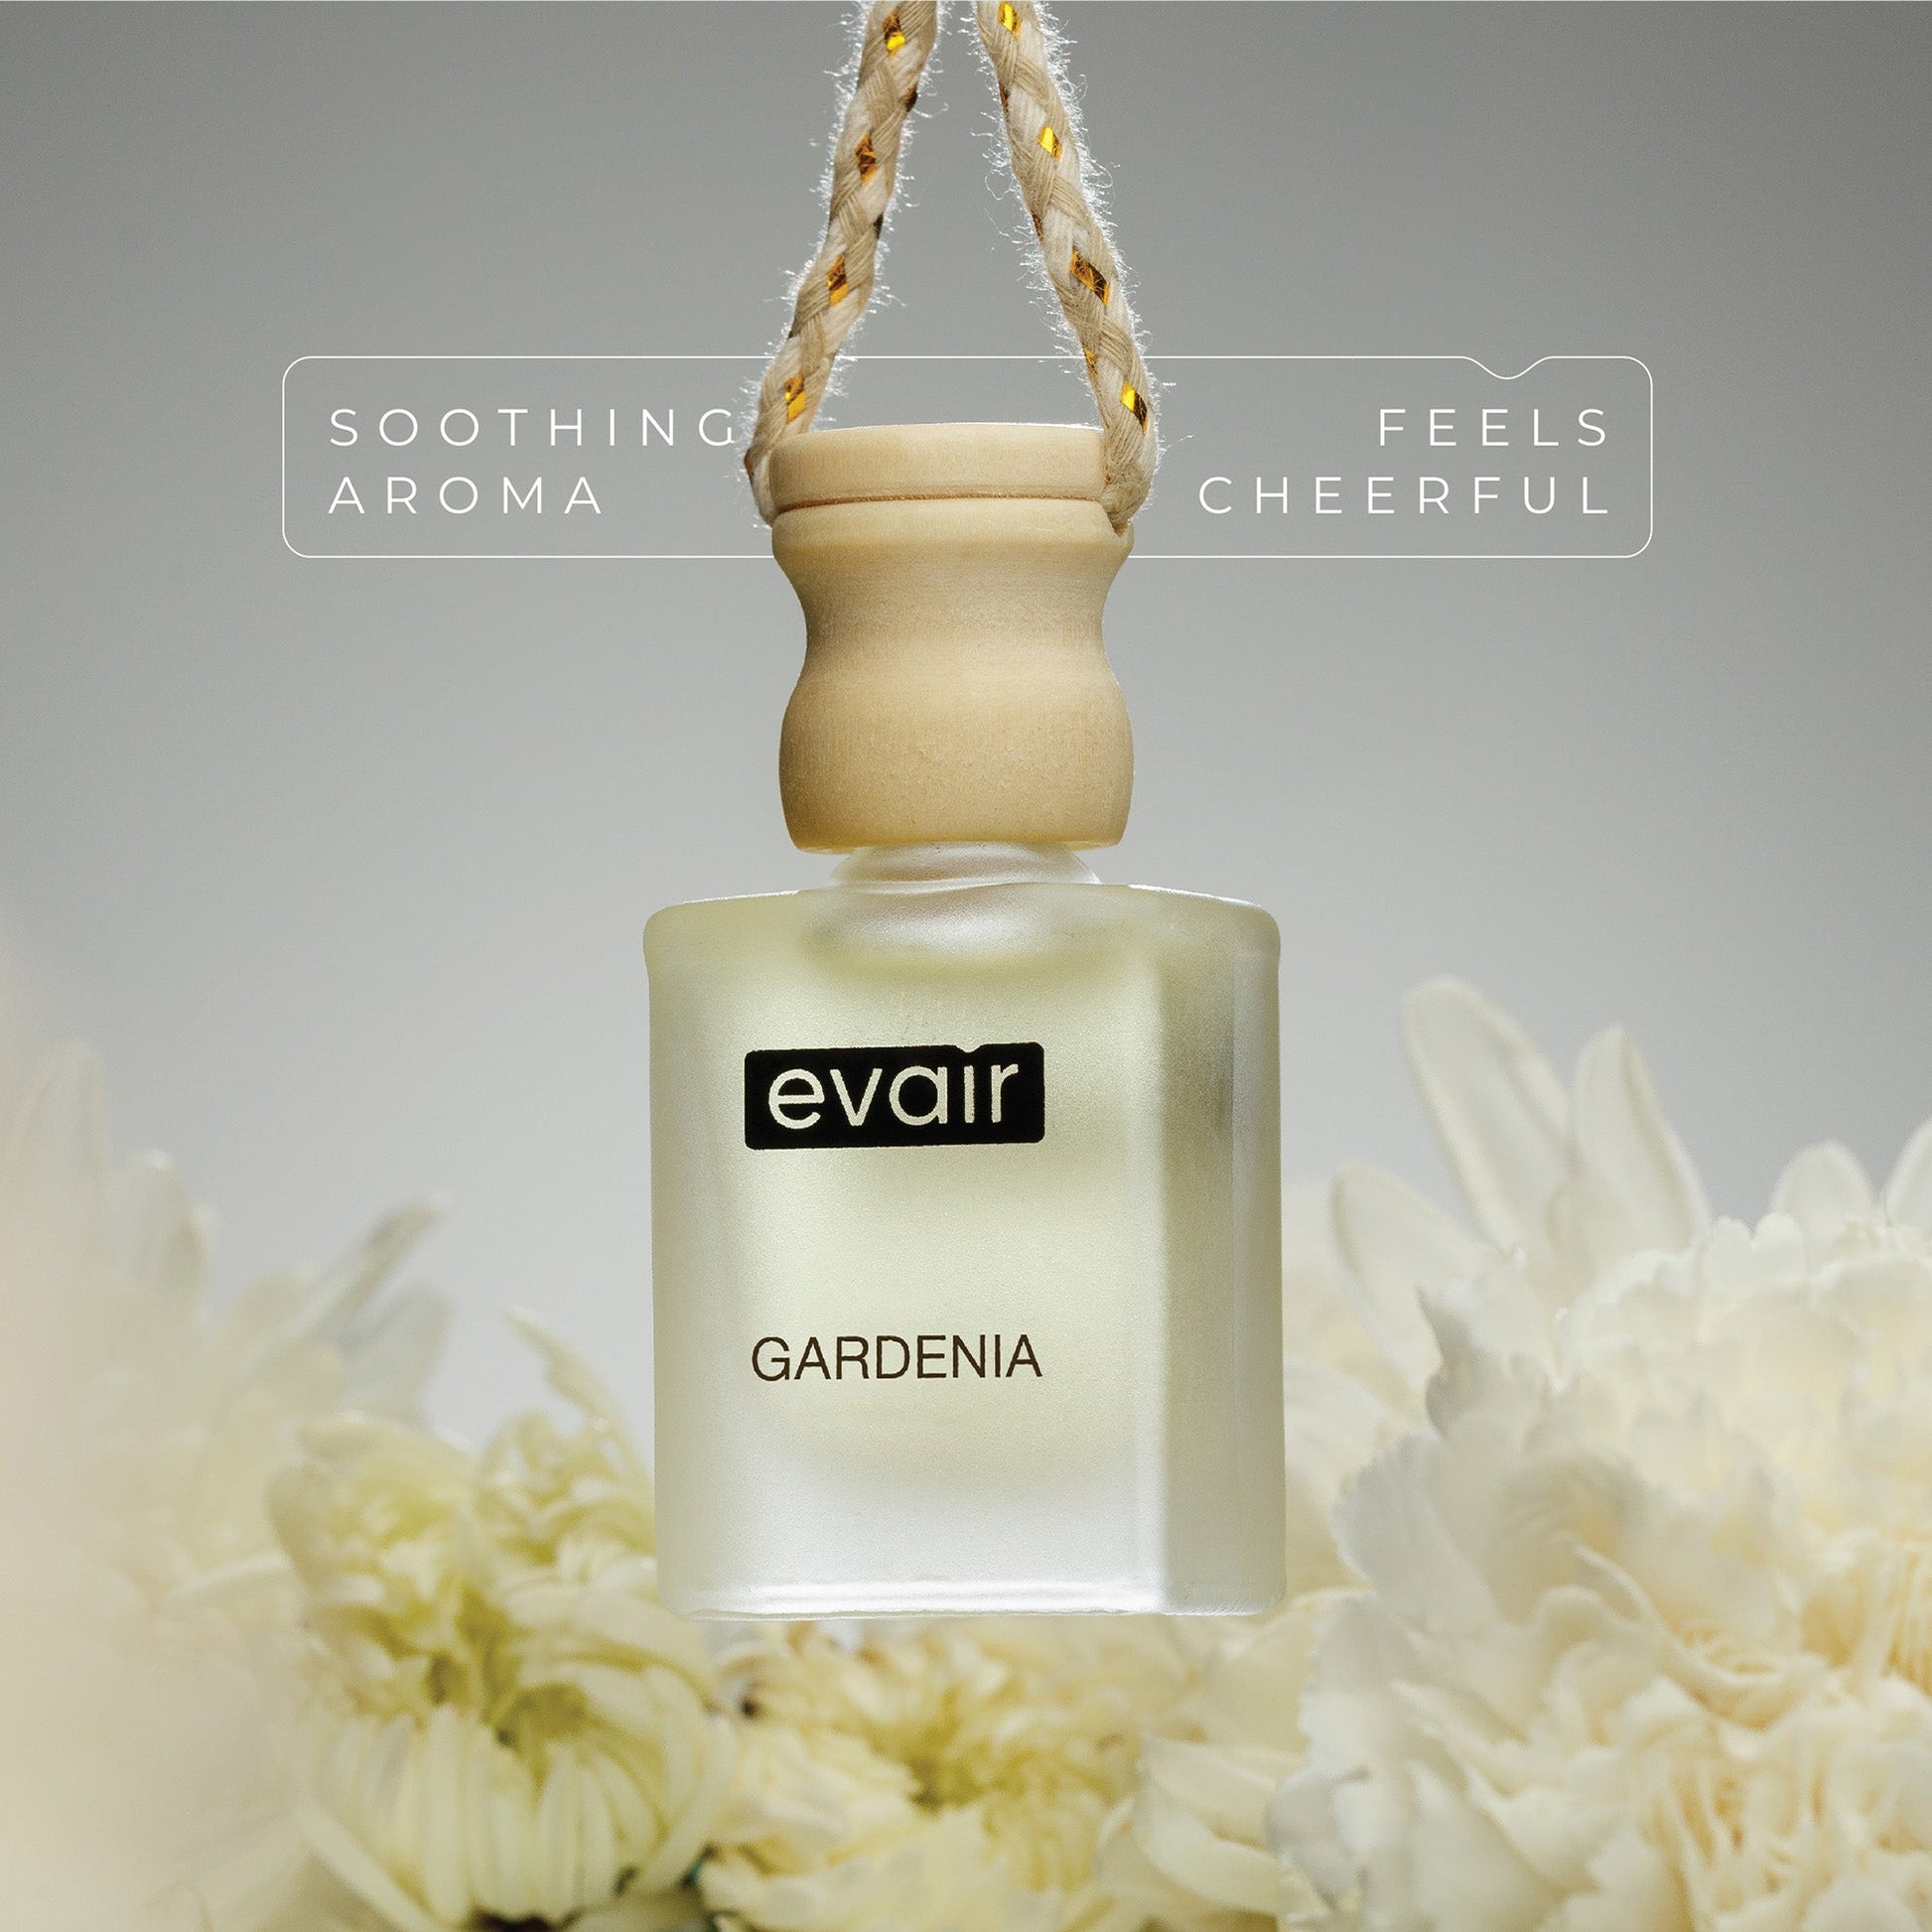 Evair Gardenai Car Perfume Glass Bottle wiith flowers